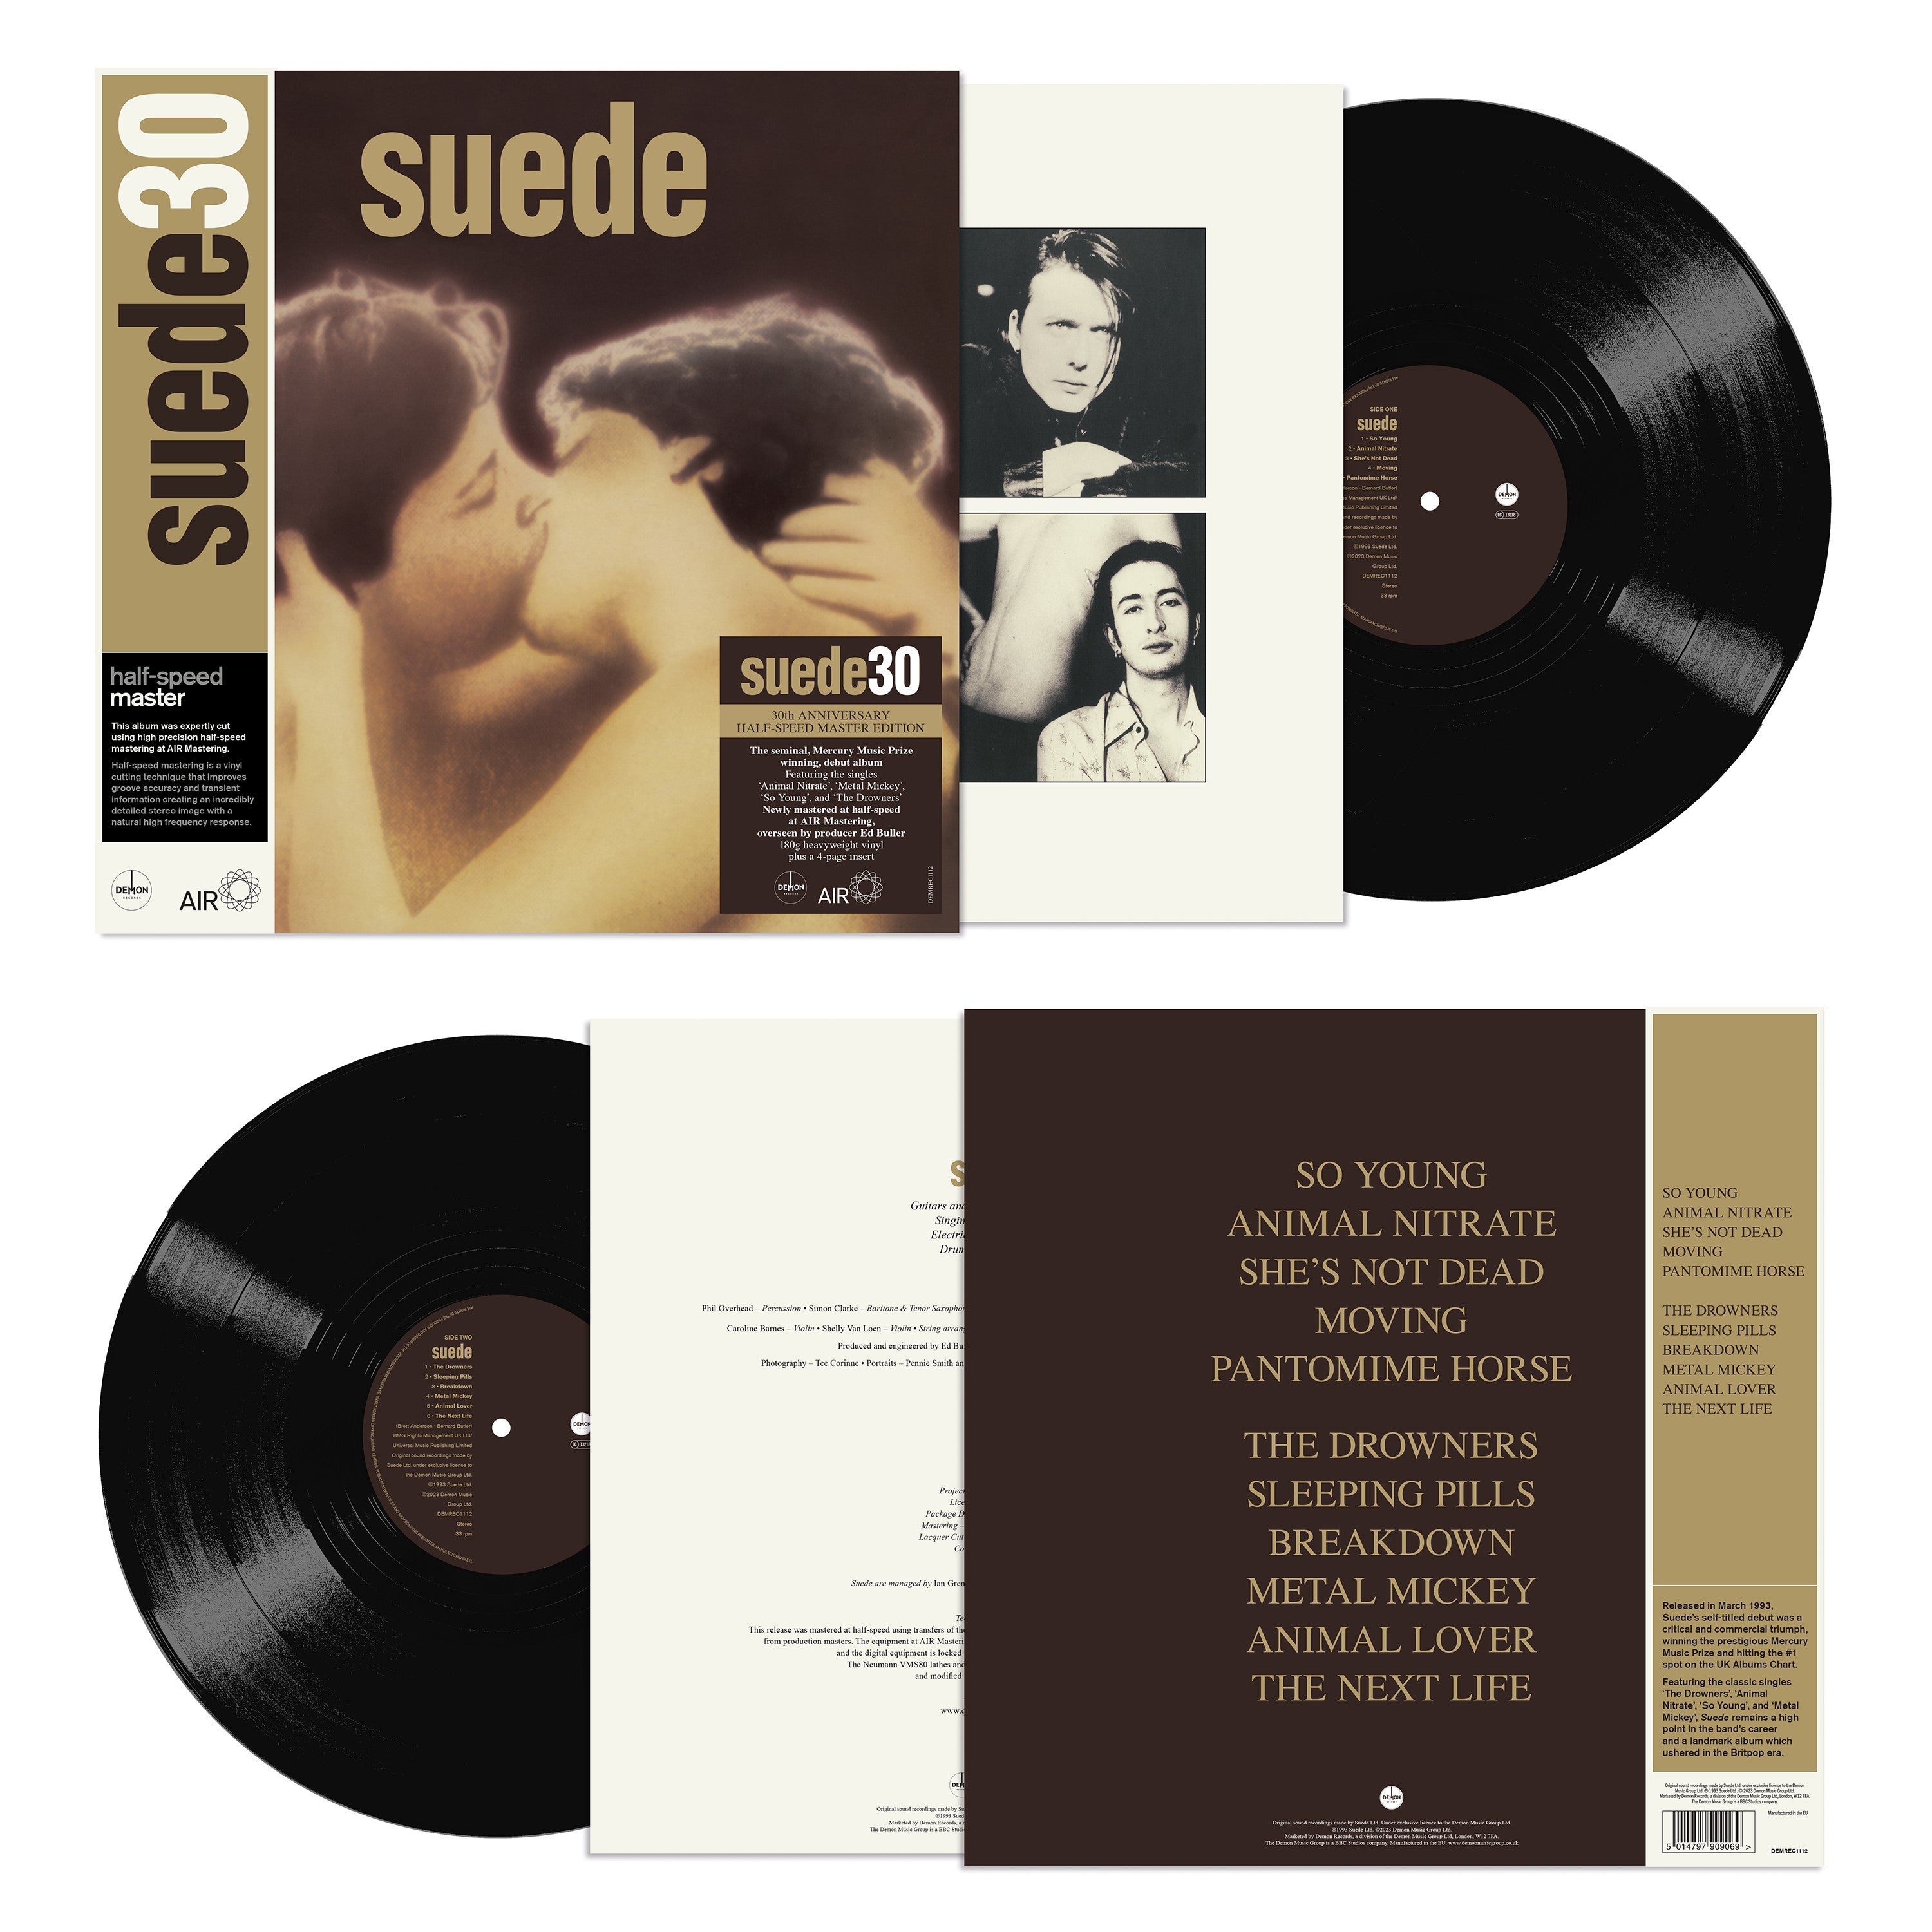 Suede - Suede (30th Anniversary Edition): Half-Speed Master Edition Vinyl LP.